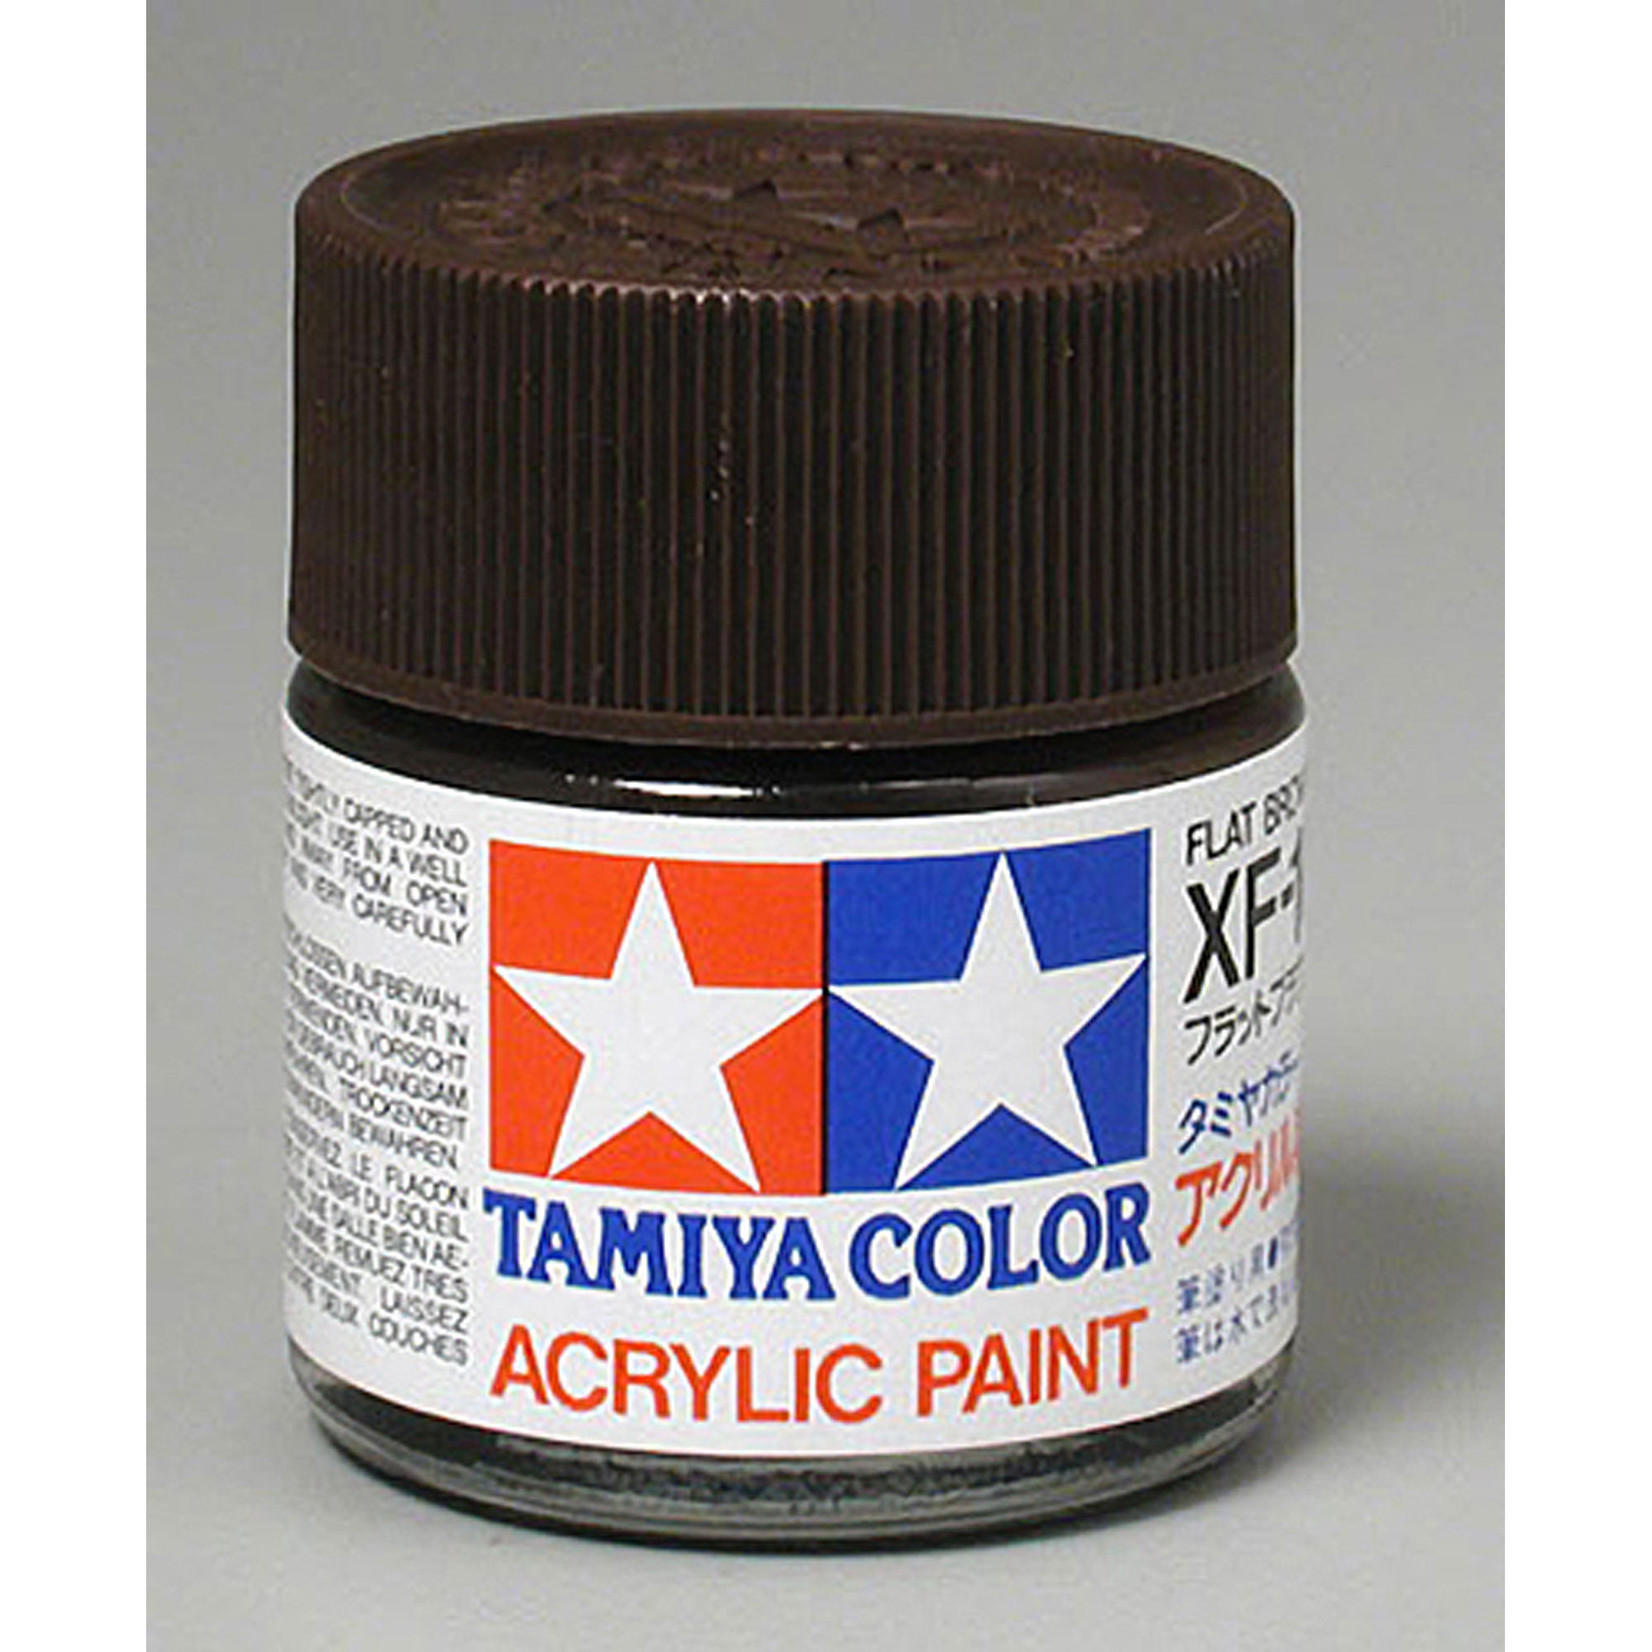 Tamiya Acrylic XF10 Flat, Brown (23ml)